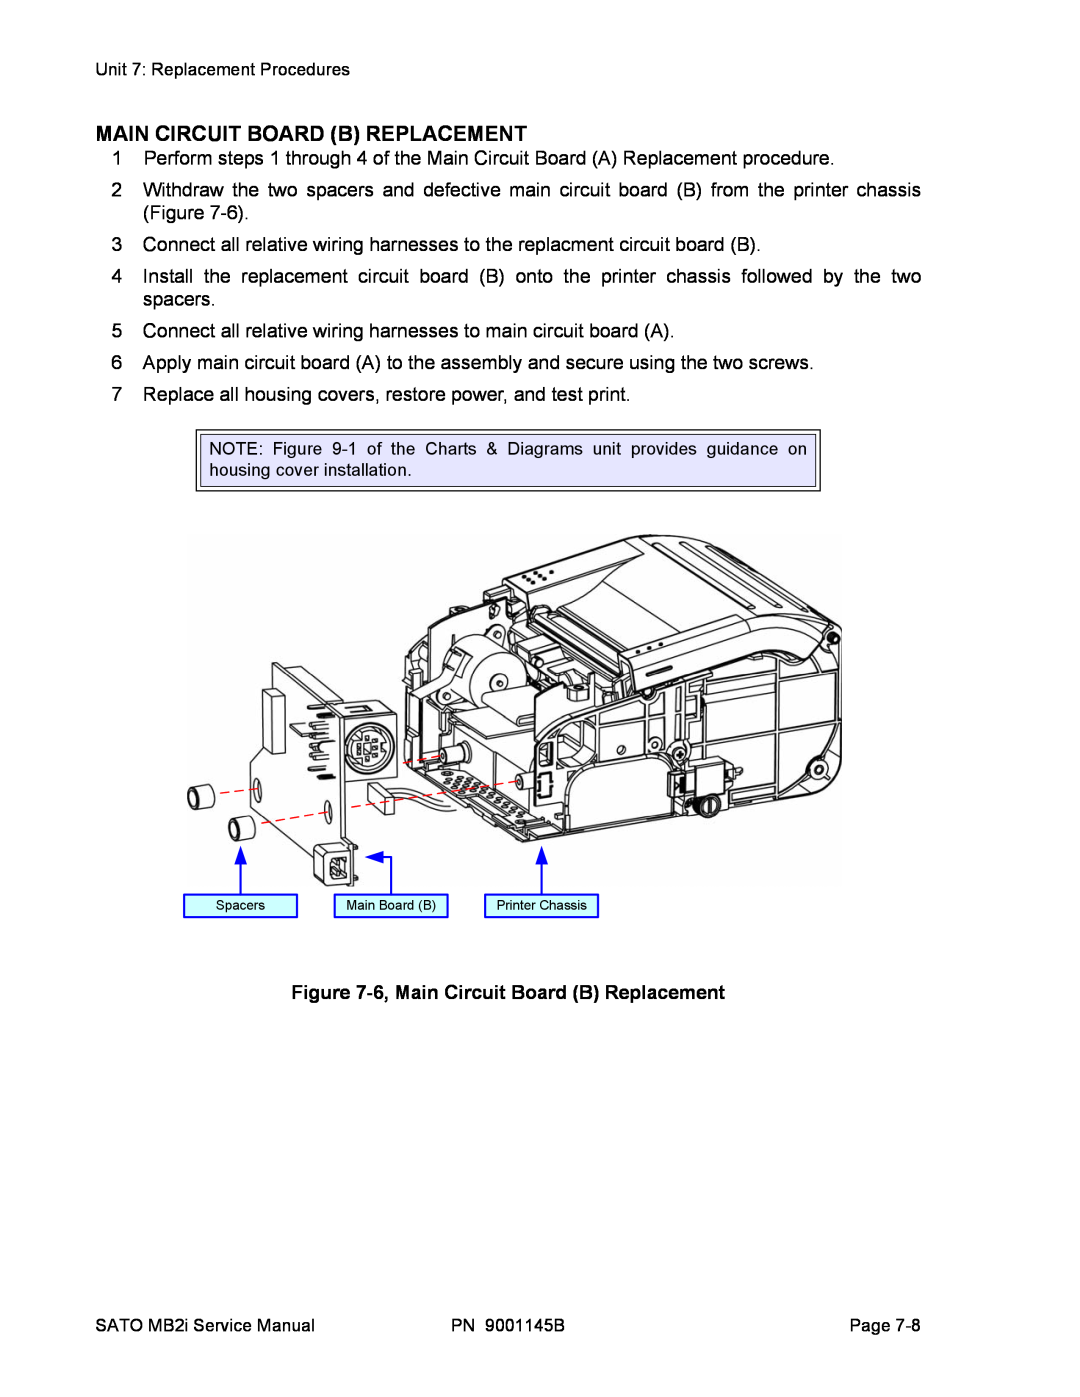 SATO 200i manual 6, Main Circuit Board B Replacement 